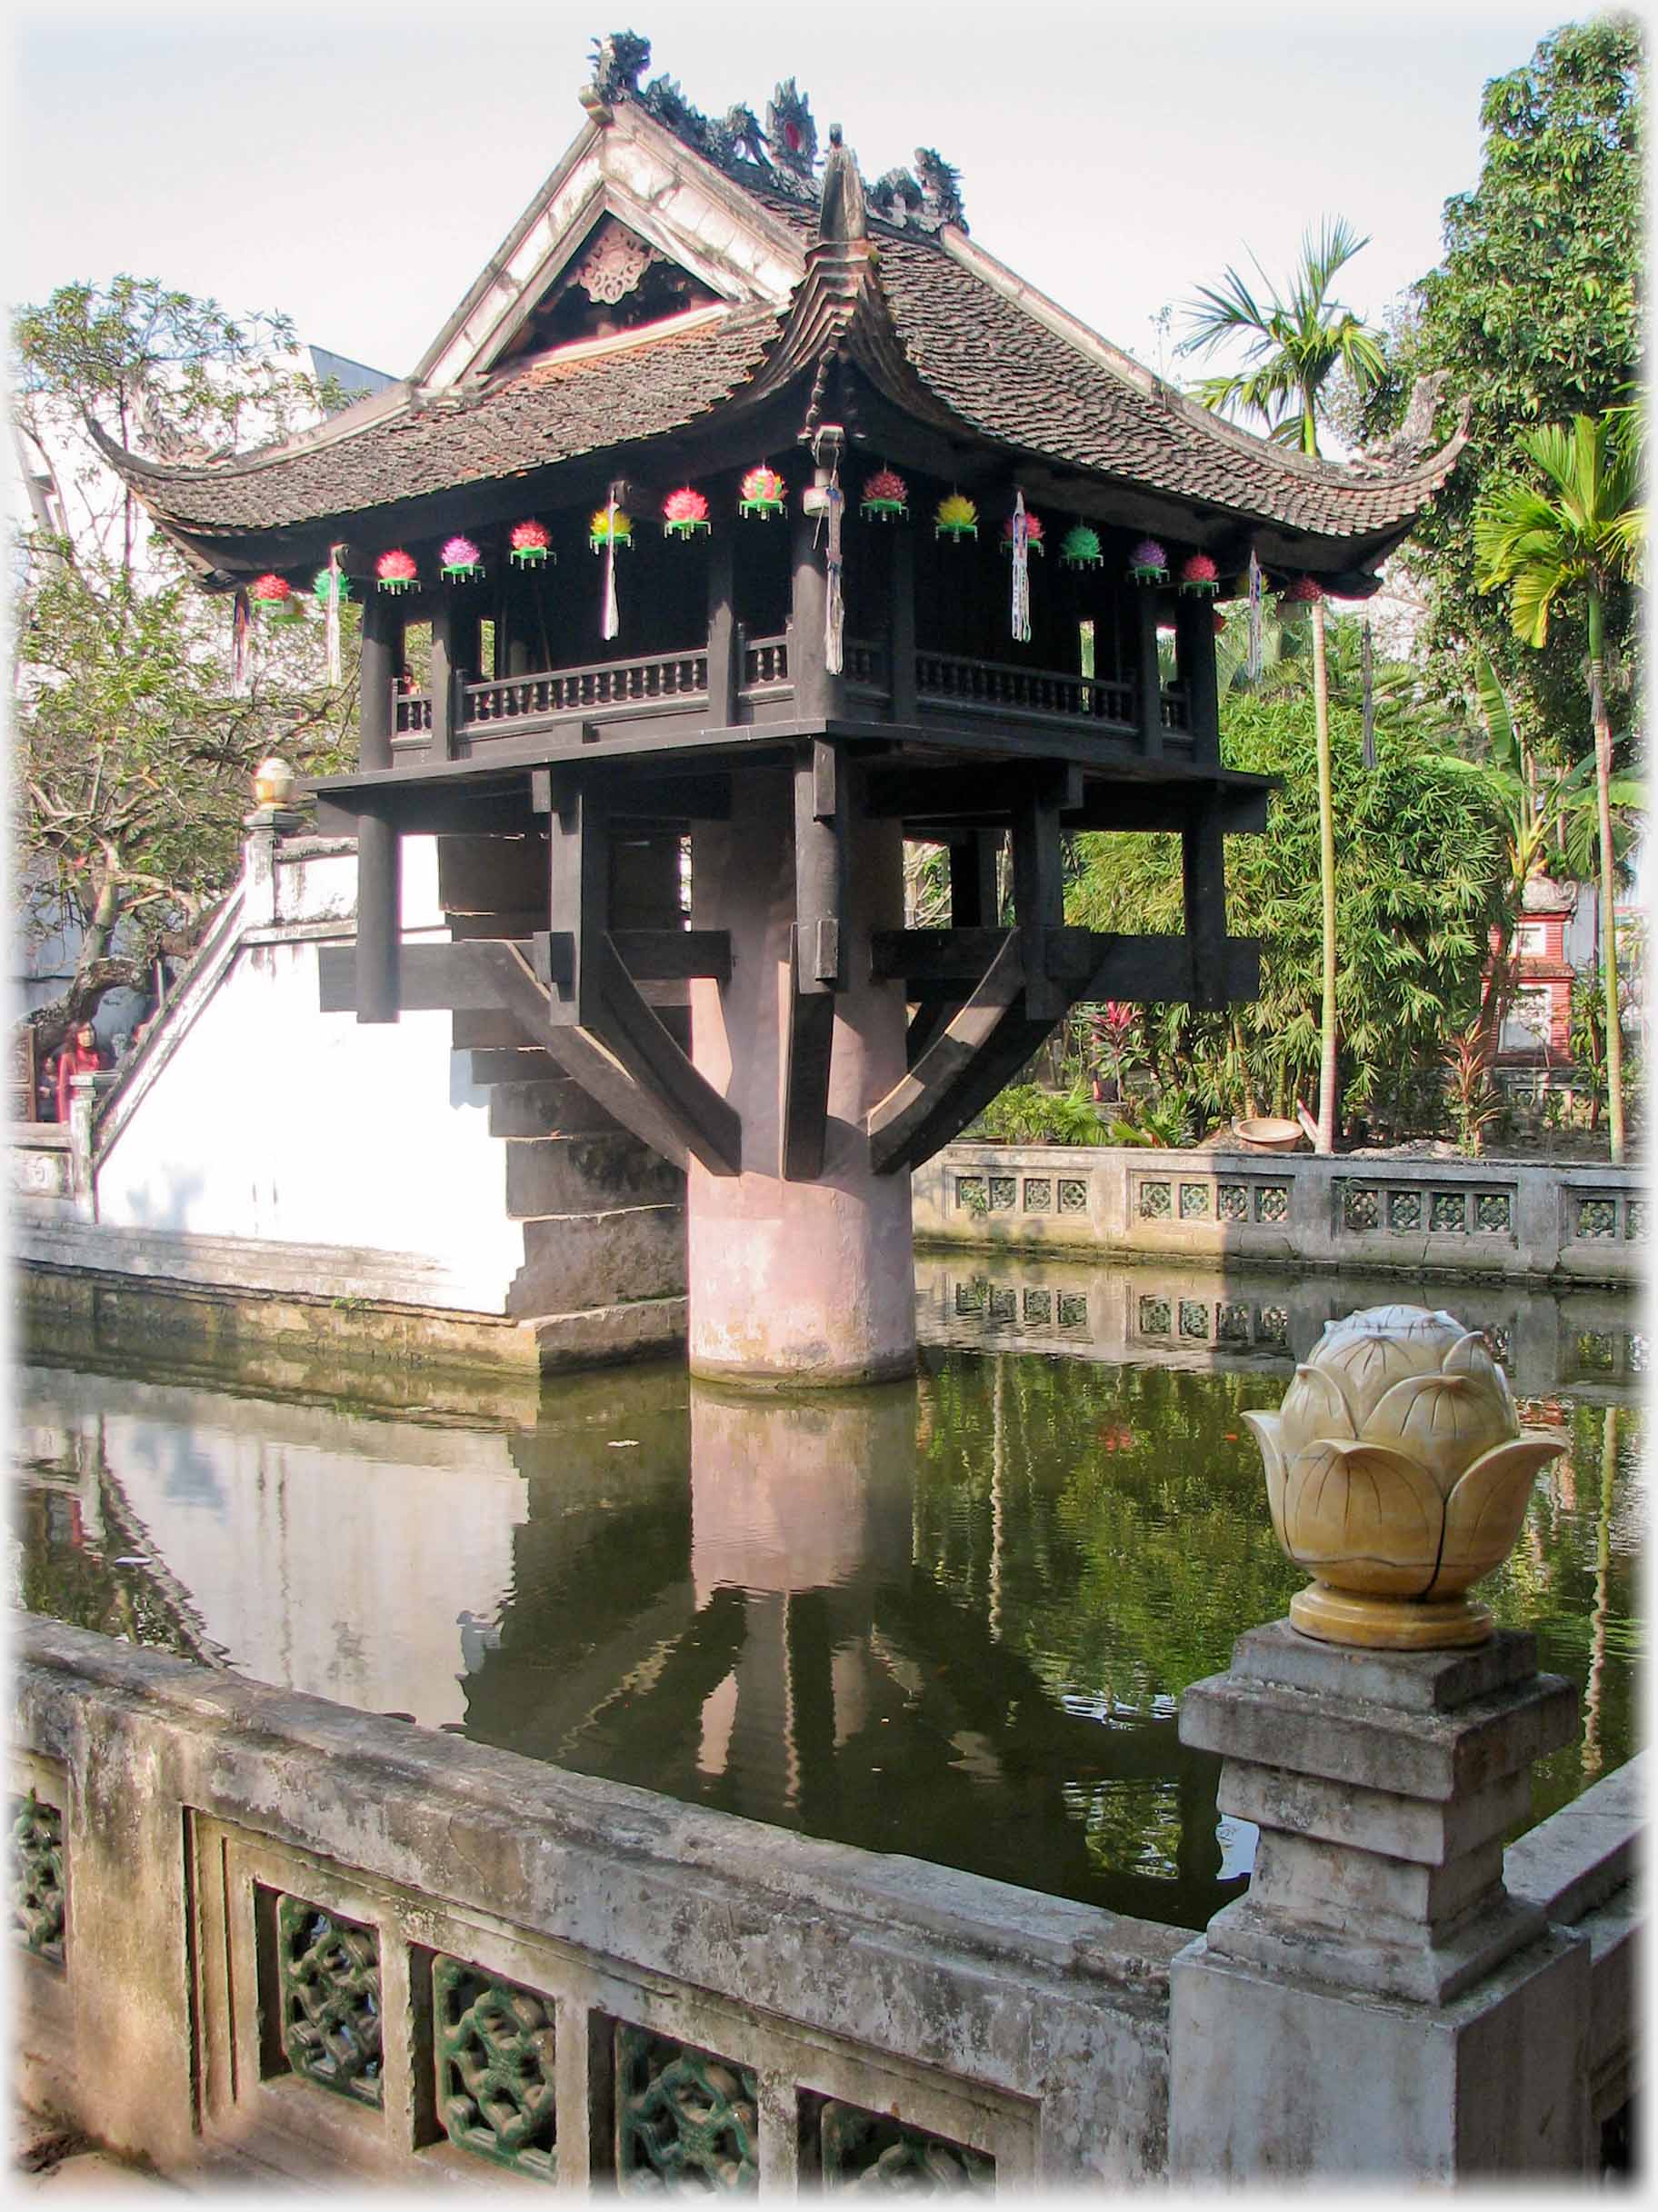 Small pagoda on column in pool.